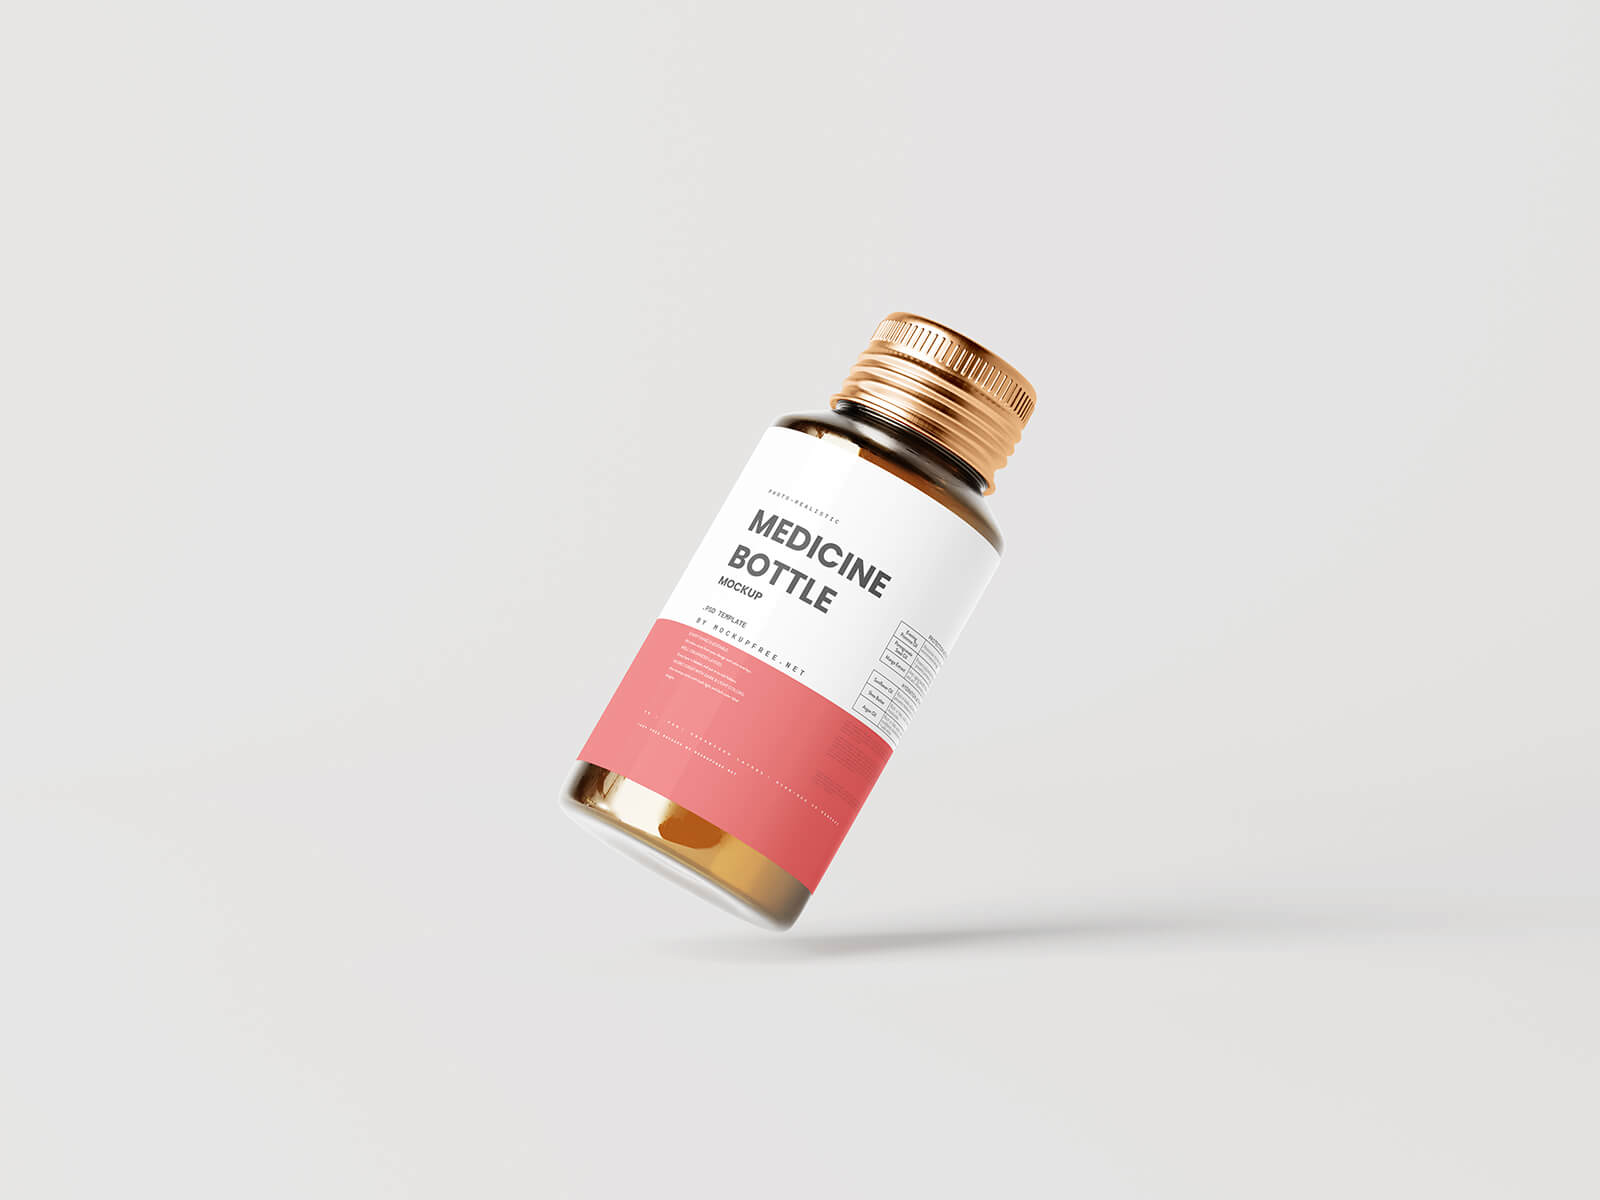 Free Amber Medicine Bottle With Box Mockup PSD